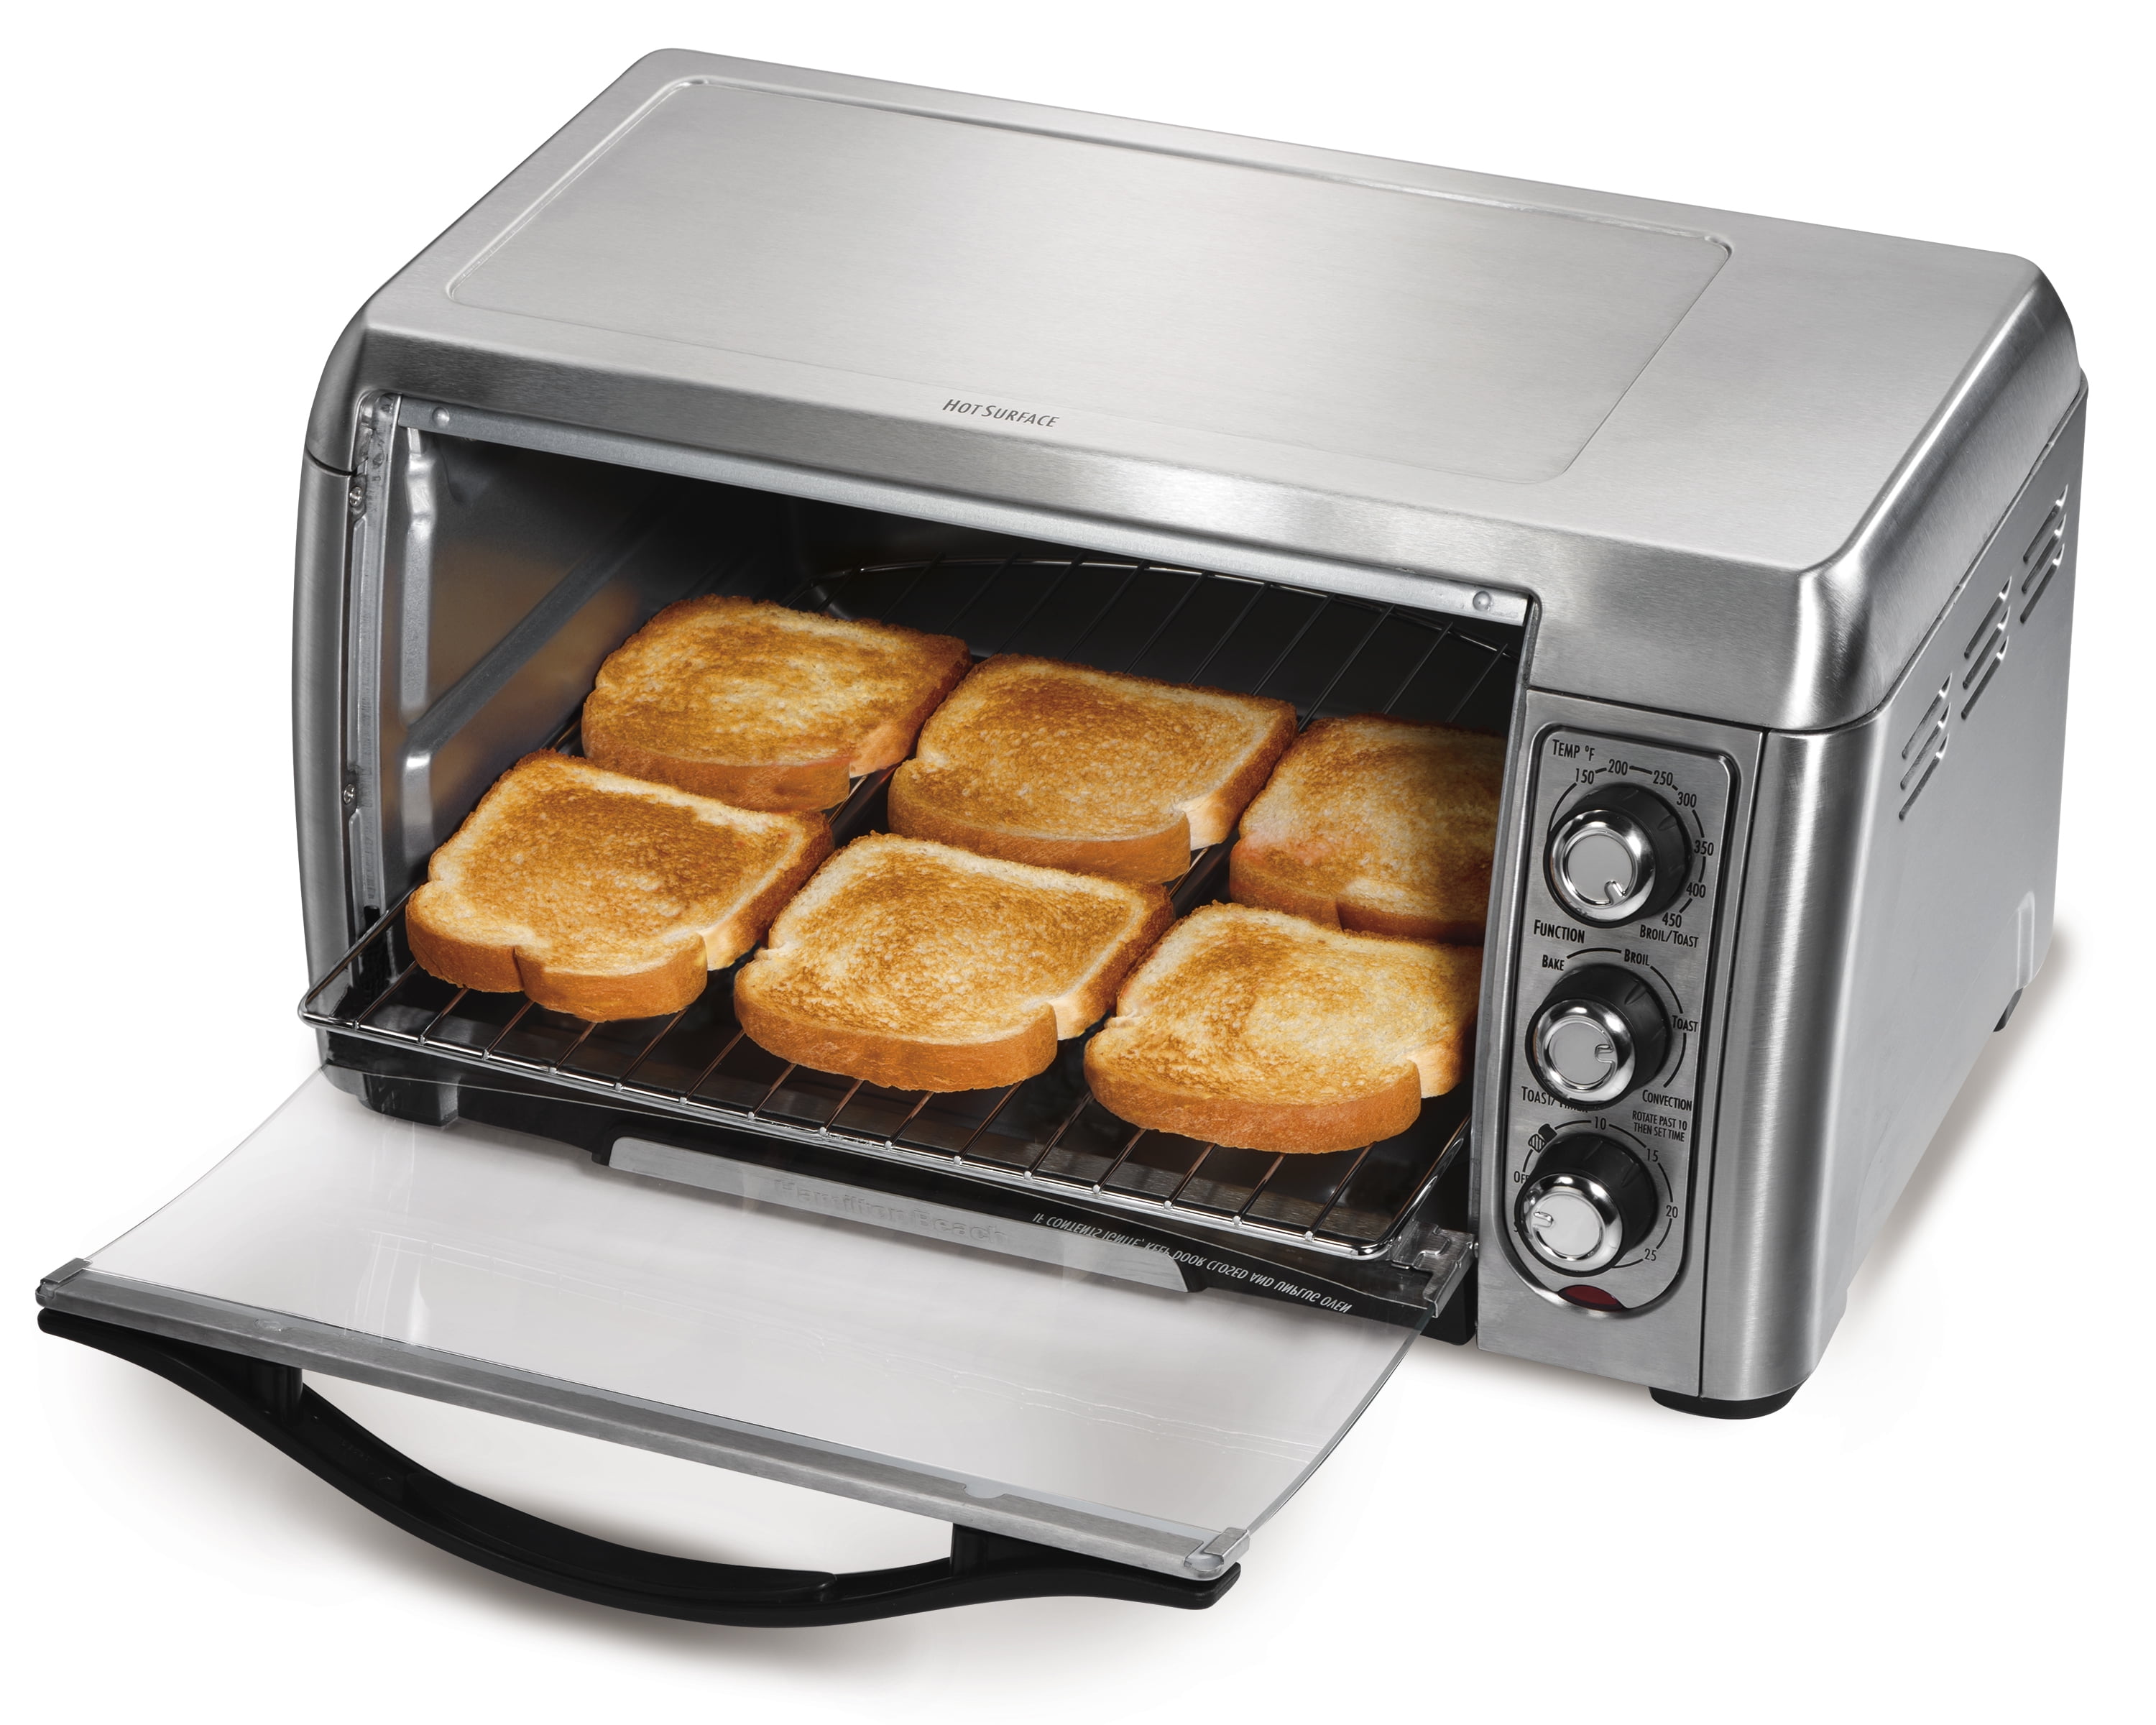 Ситилинк купить печь. Тостер Hitt HT-5305. Тостер Electrolux St 6700. Мини печь Toaster Oven. Тостер NDV-5660.